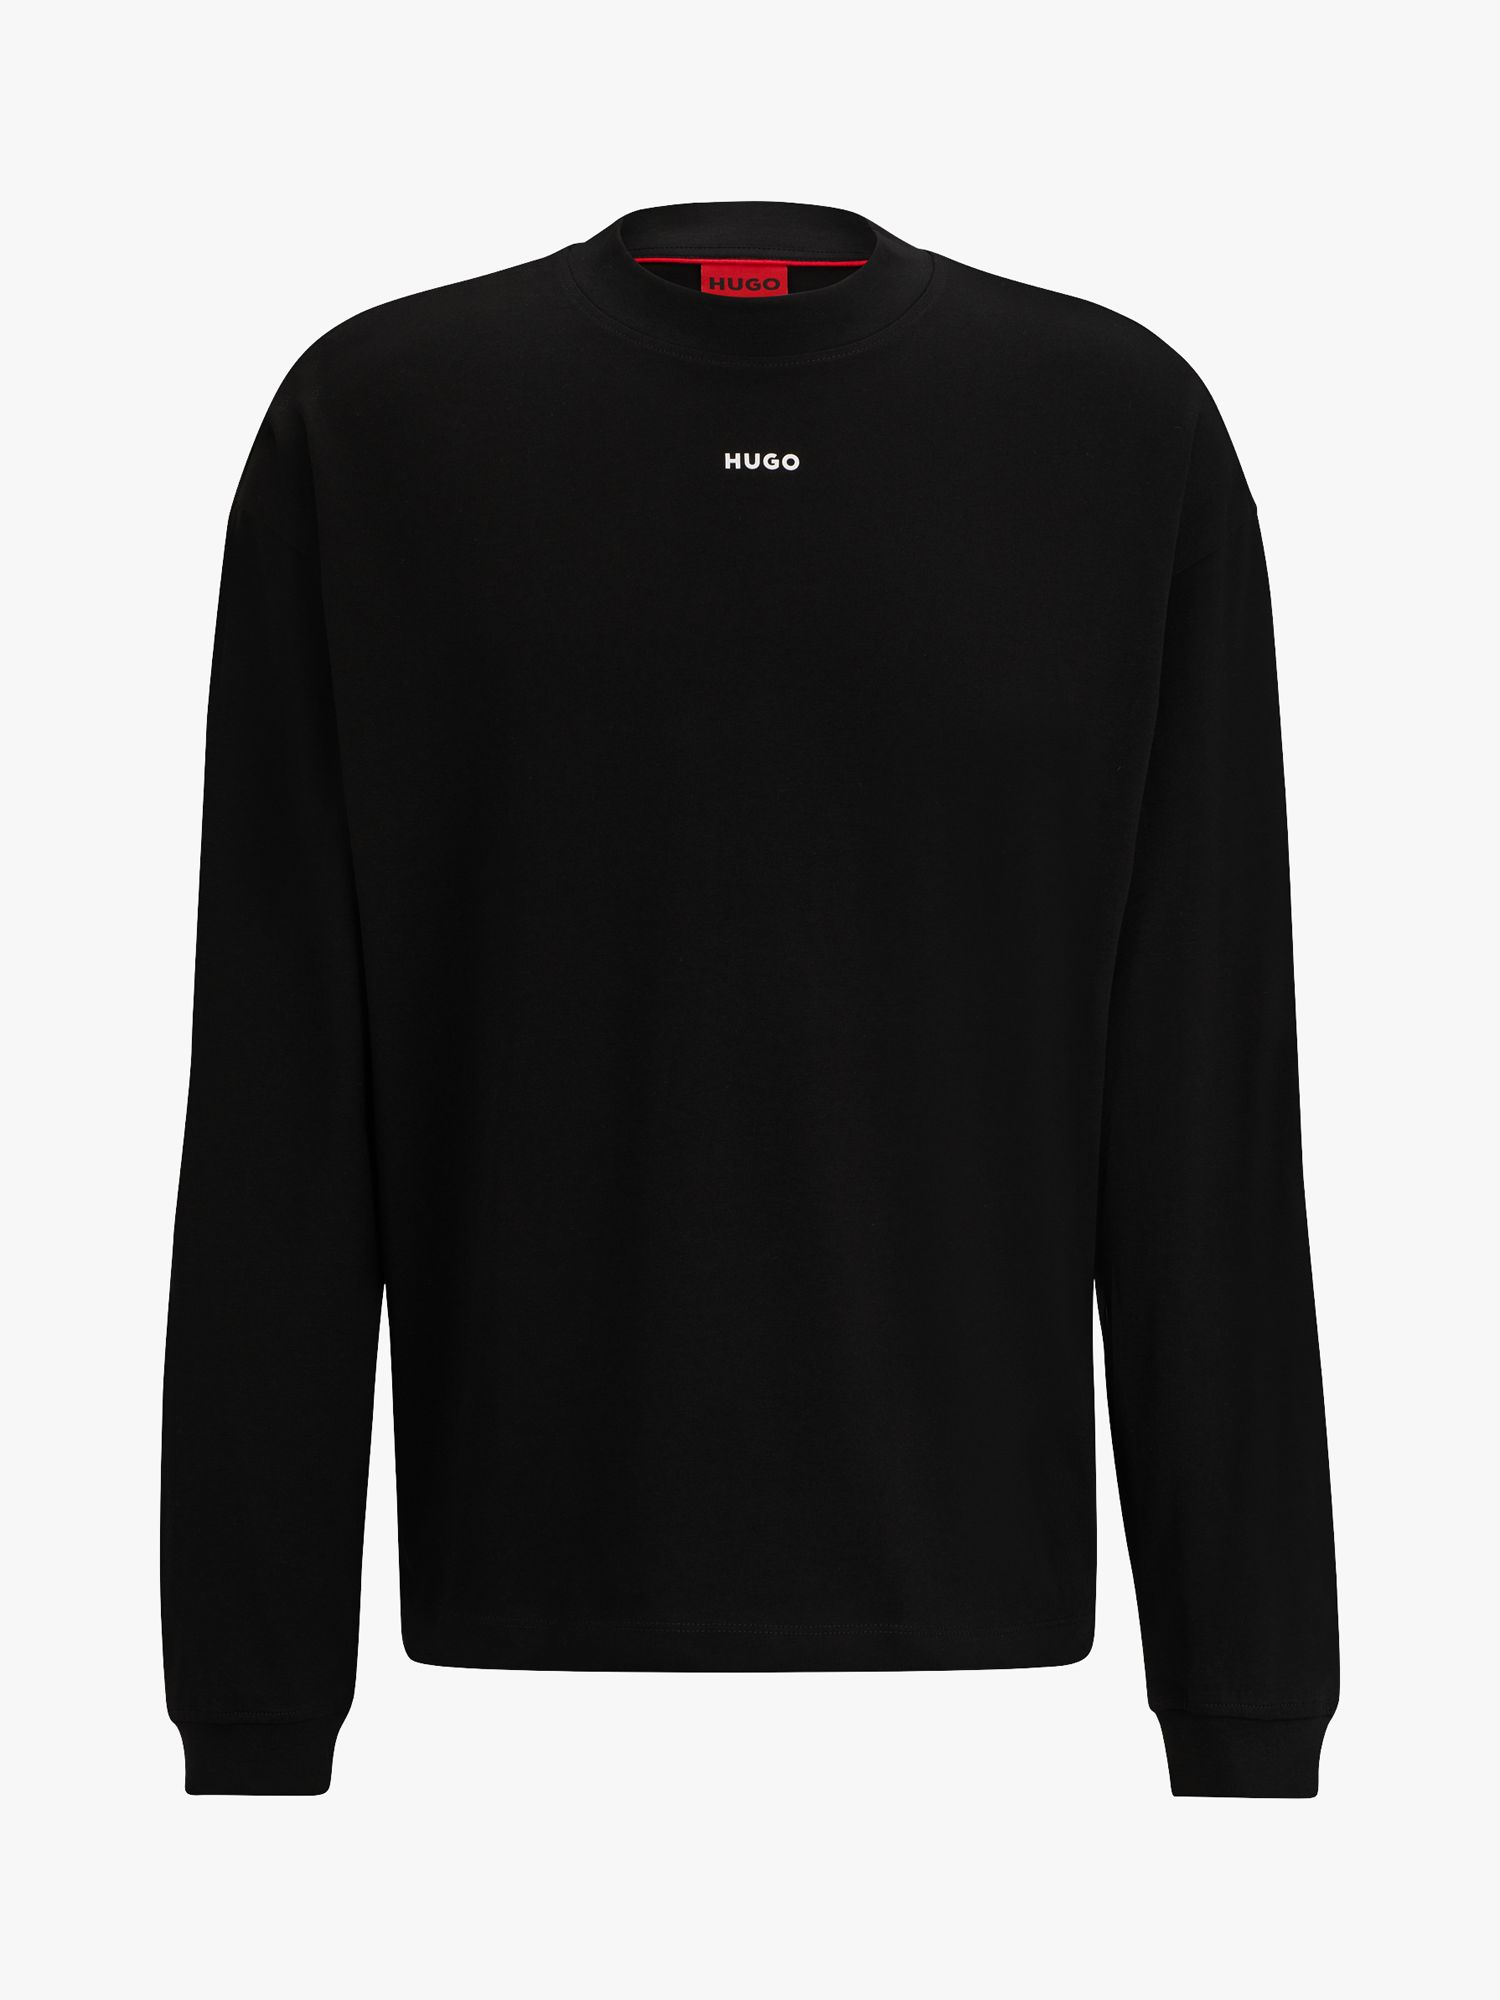 HUGO Daposo Crew Neck Logo Sweatshirt, Black, L